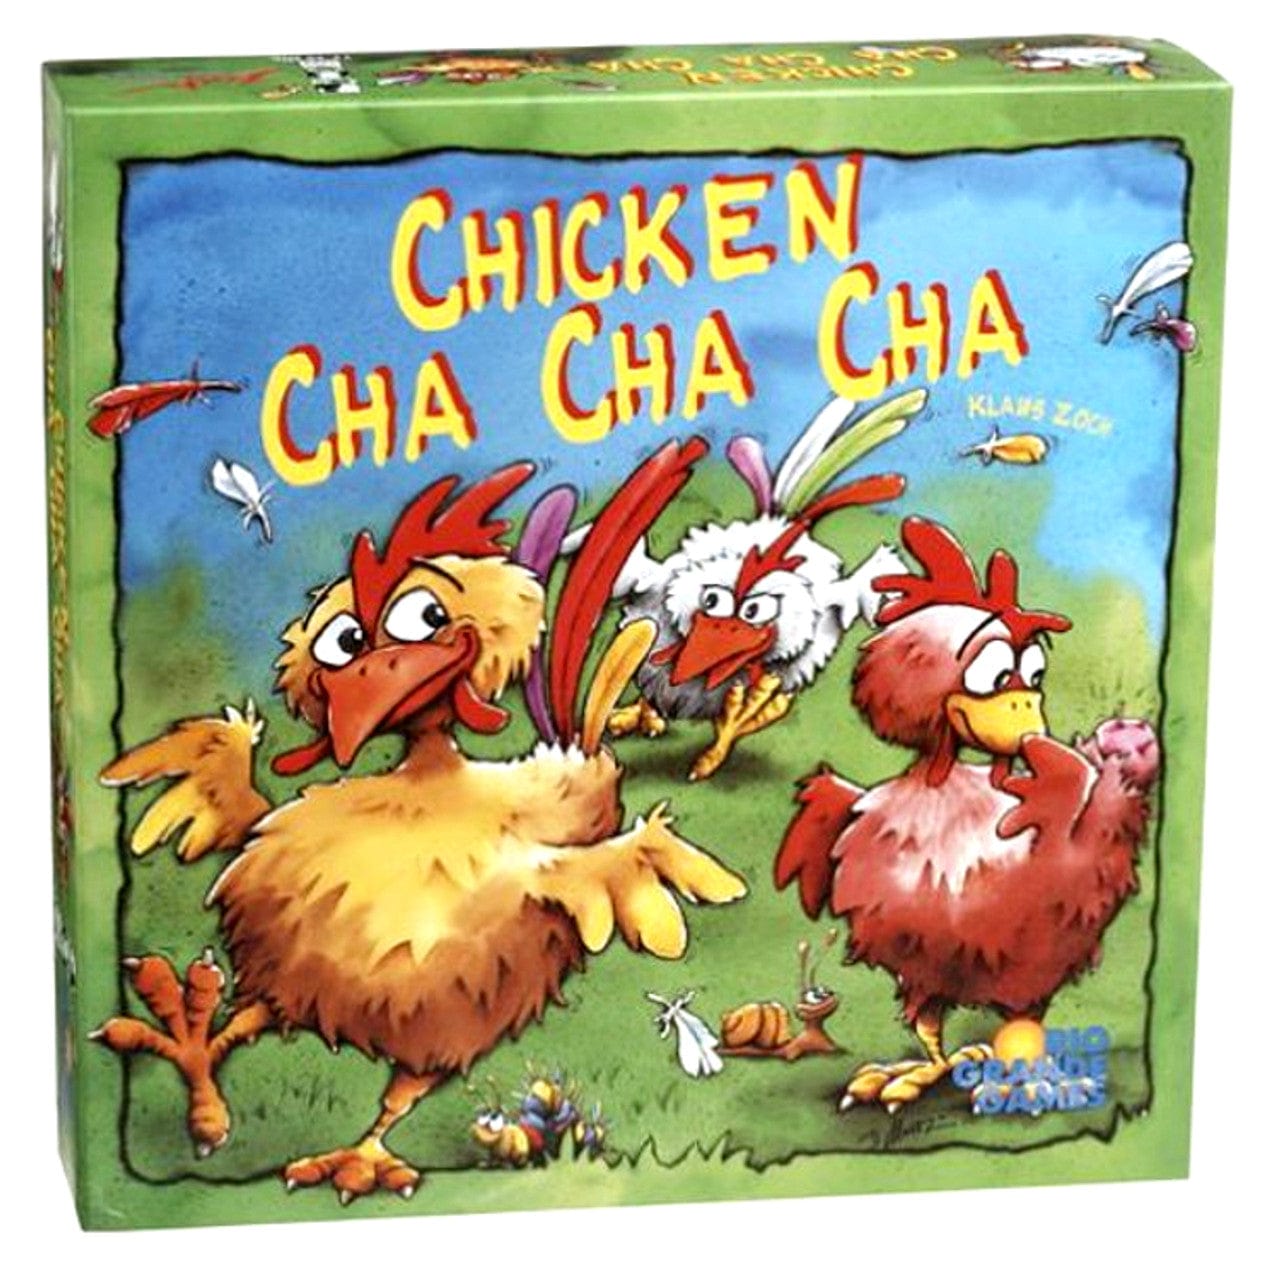 Chicken Cha Cha Cha - Third Eye